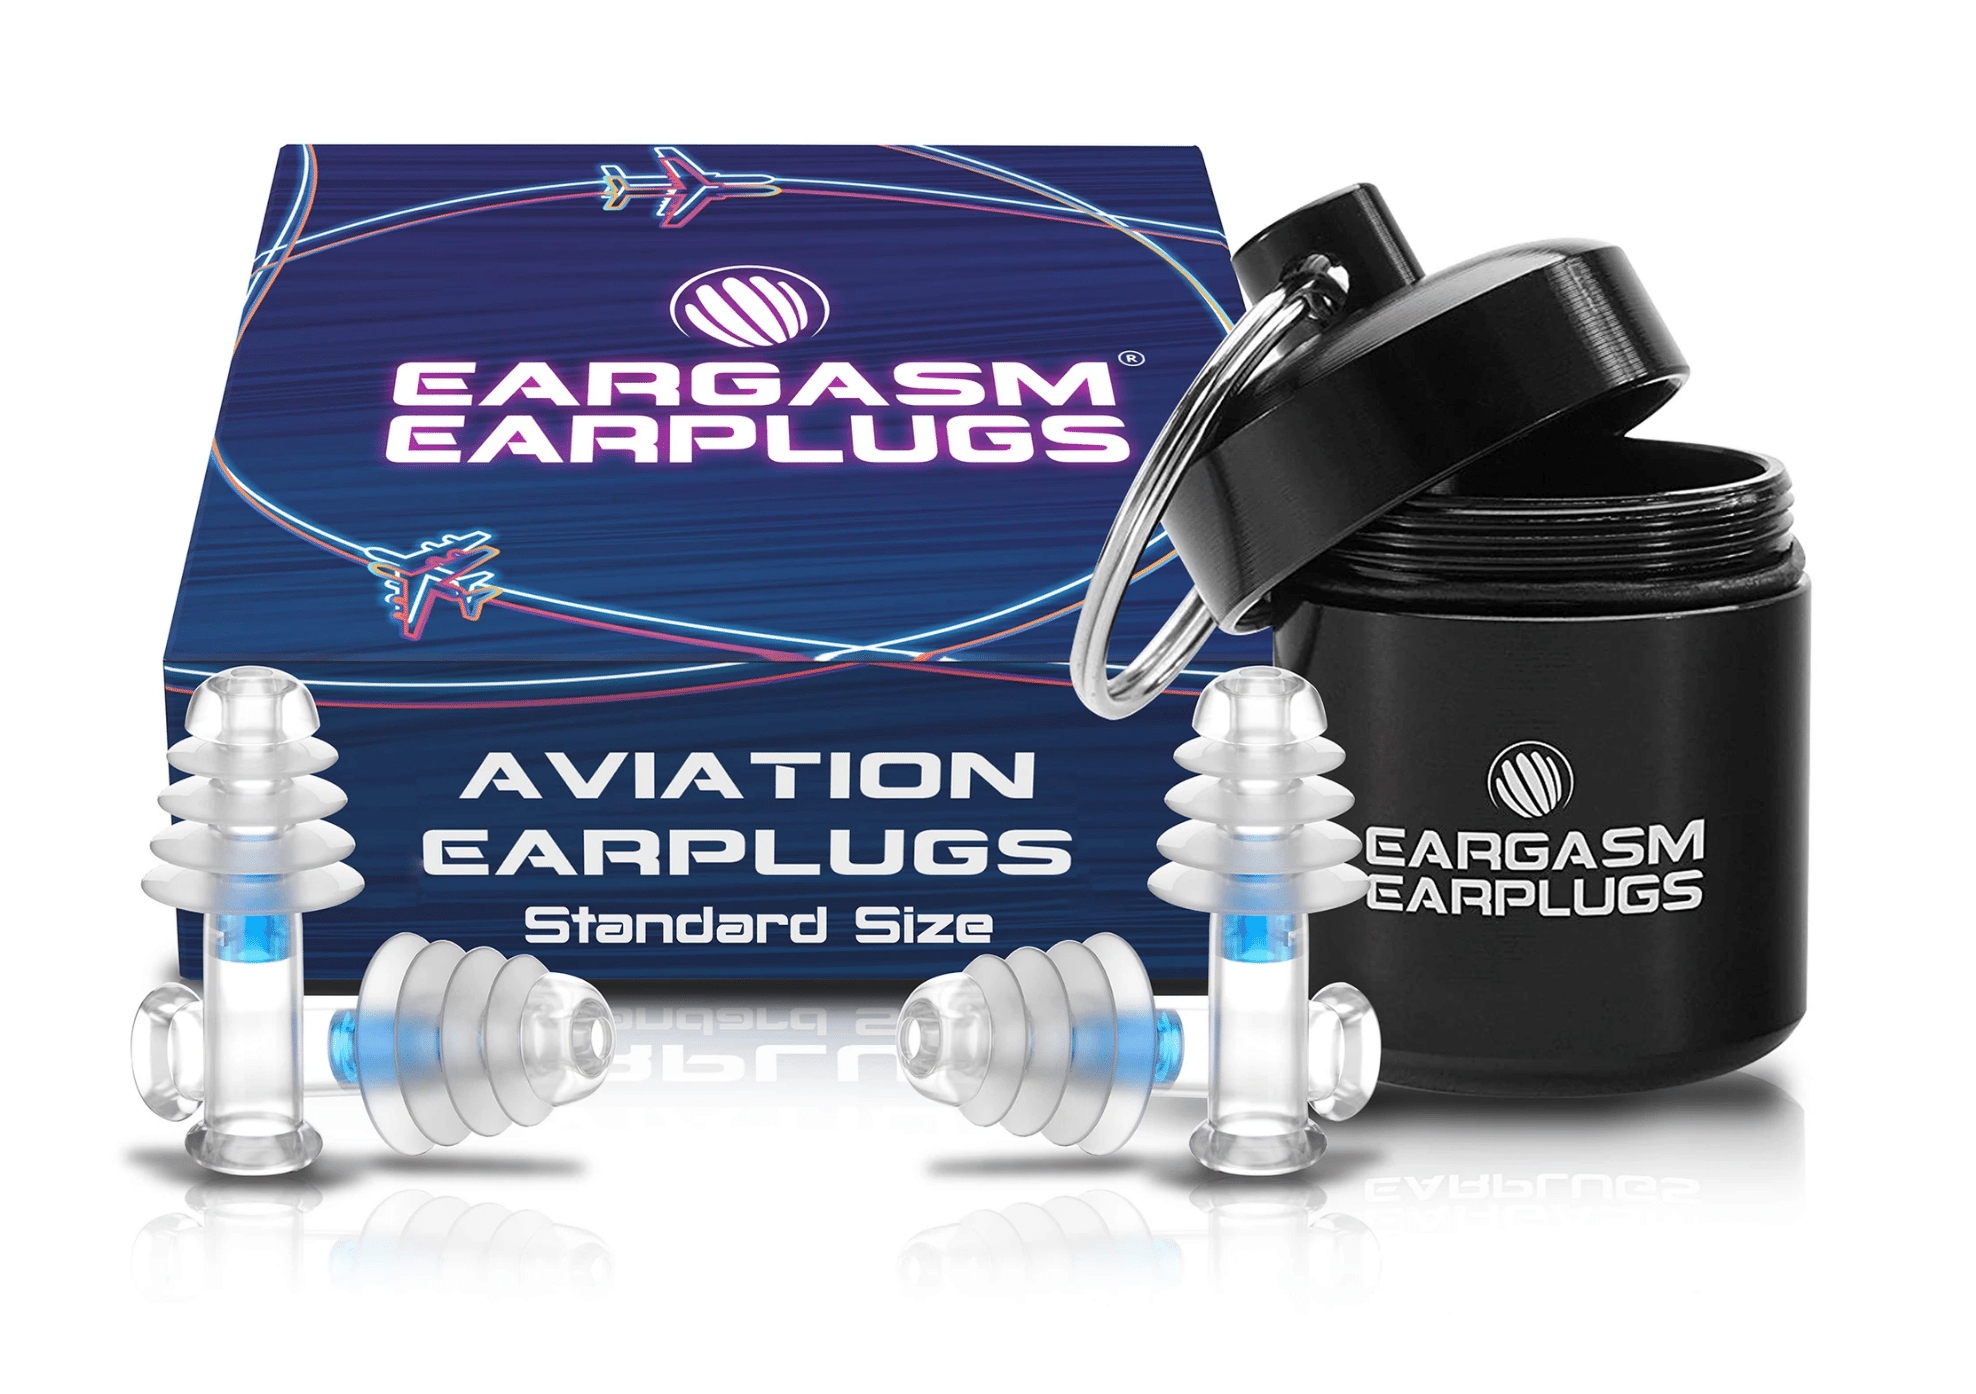 Eargasm Aviation Earplugs - Reduce Ear Pain During Air Travel!